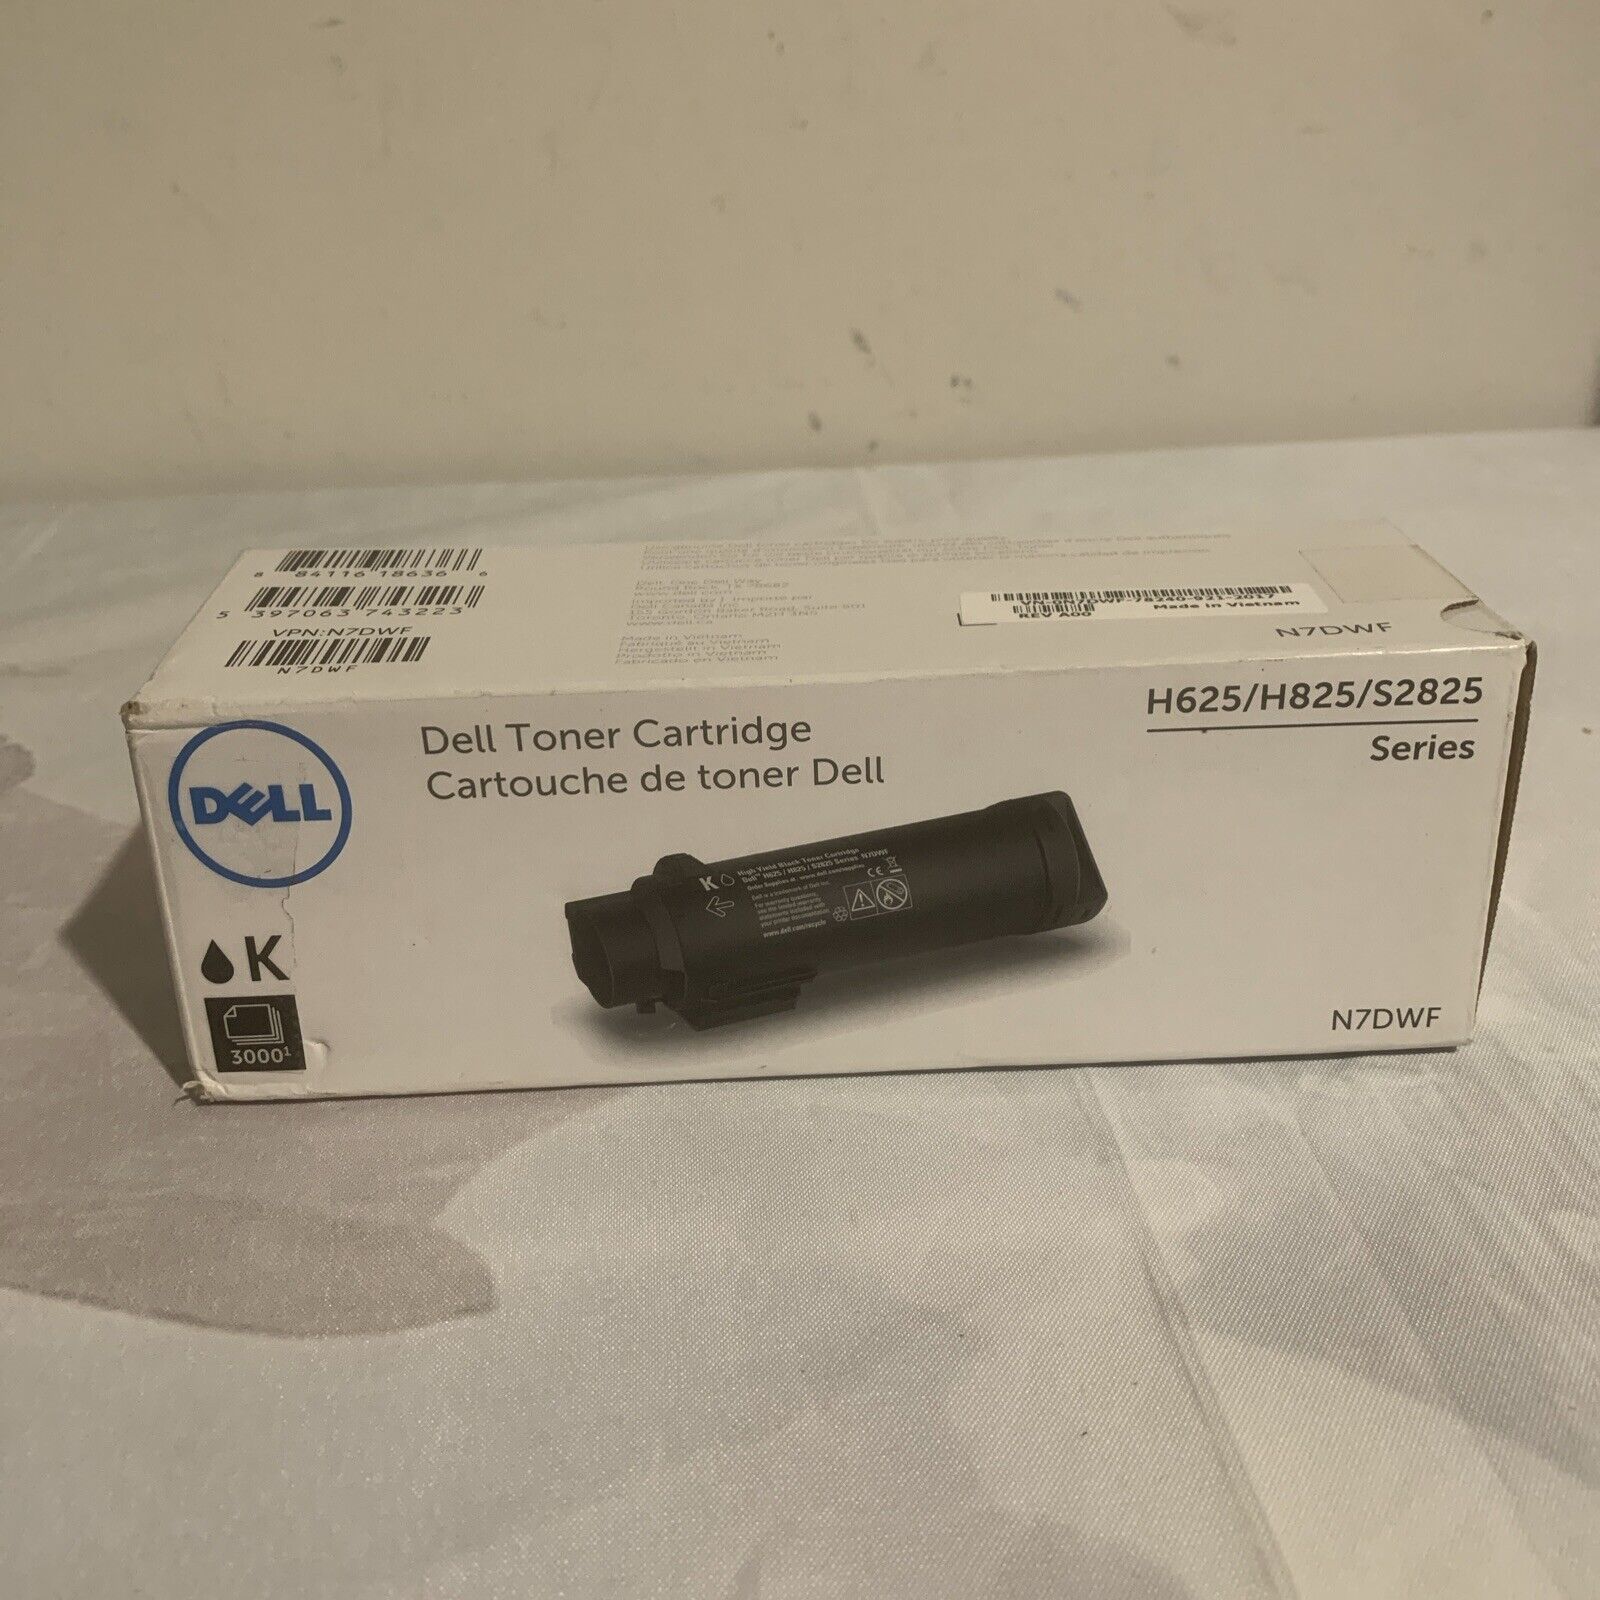 Dell N7DWF Black Original Toner Cartridge for H625/H825/S2825 Series Unused New